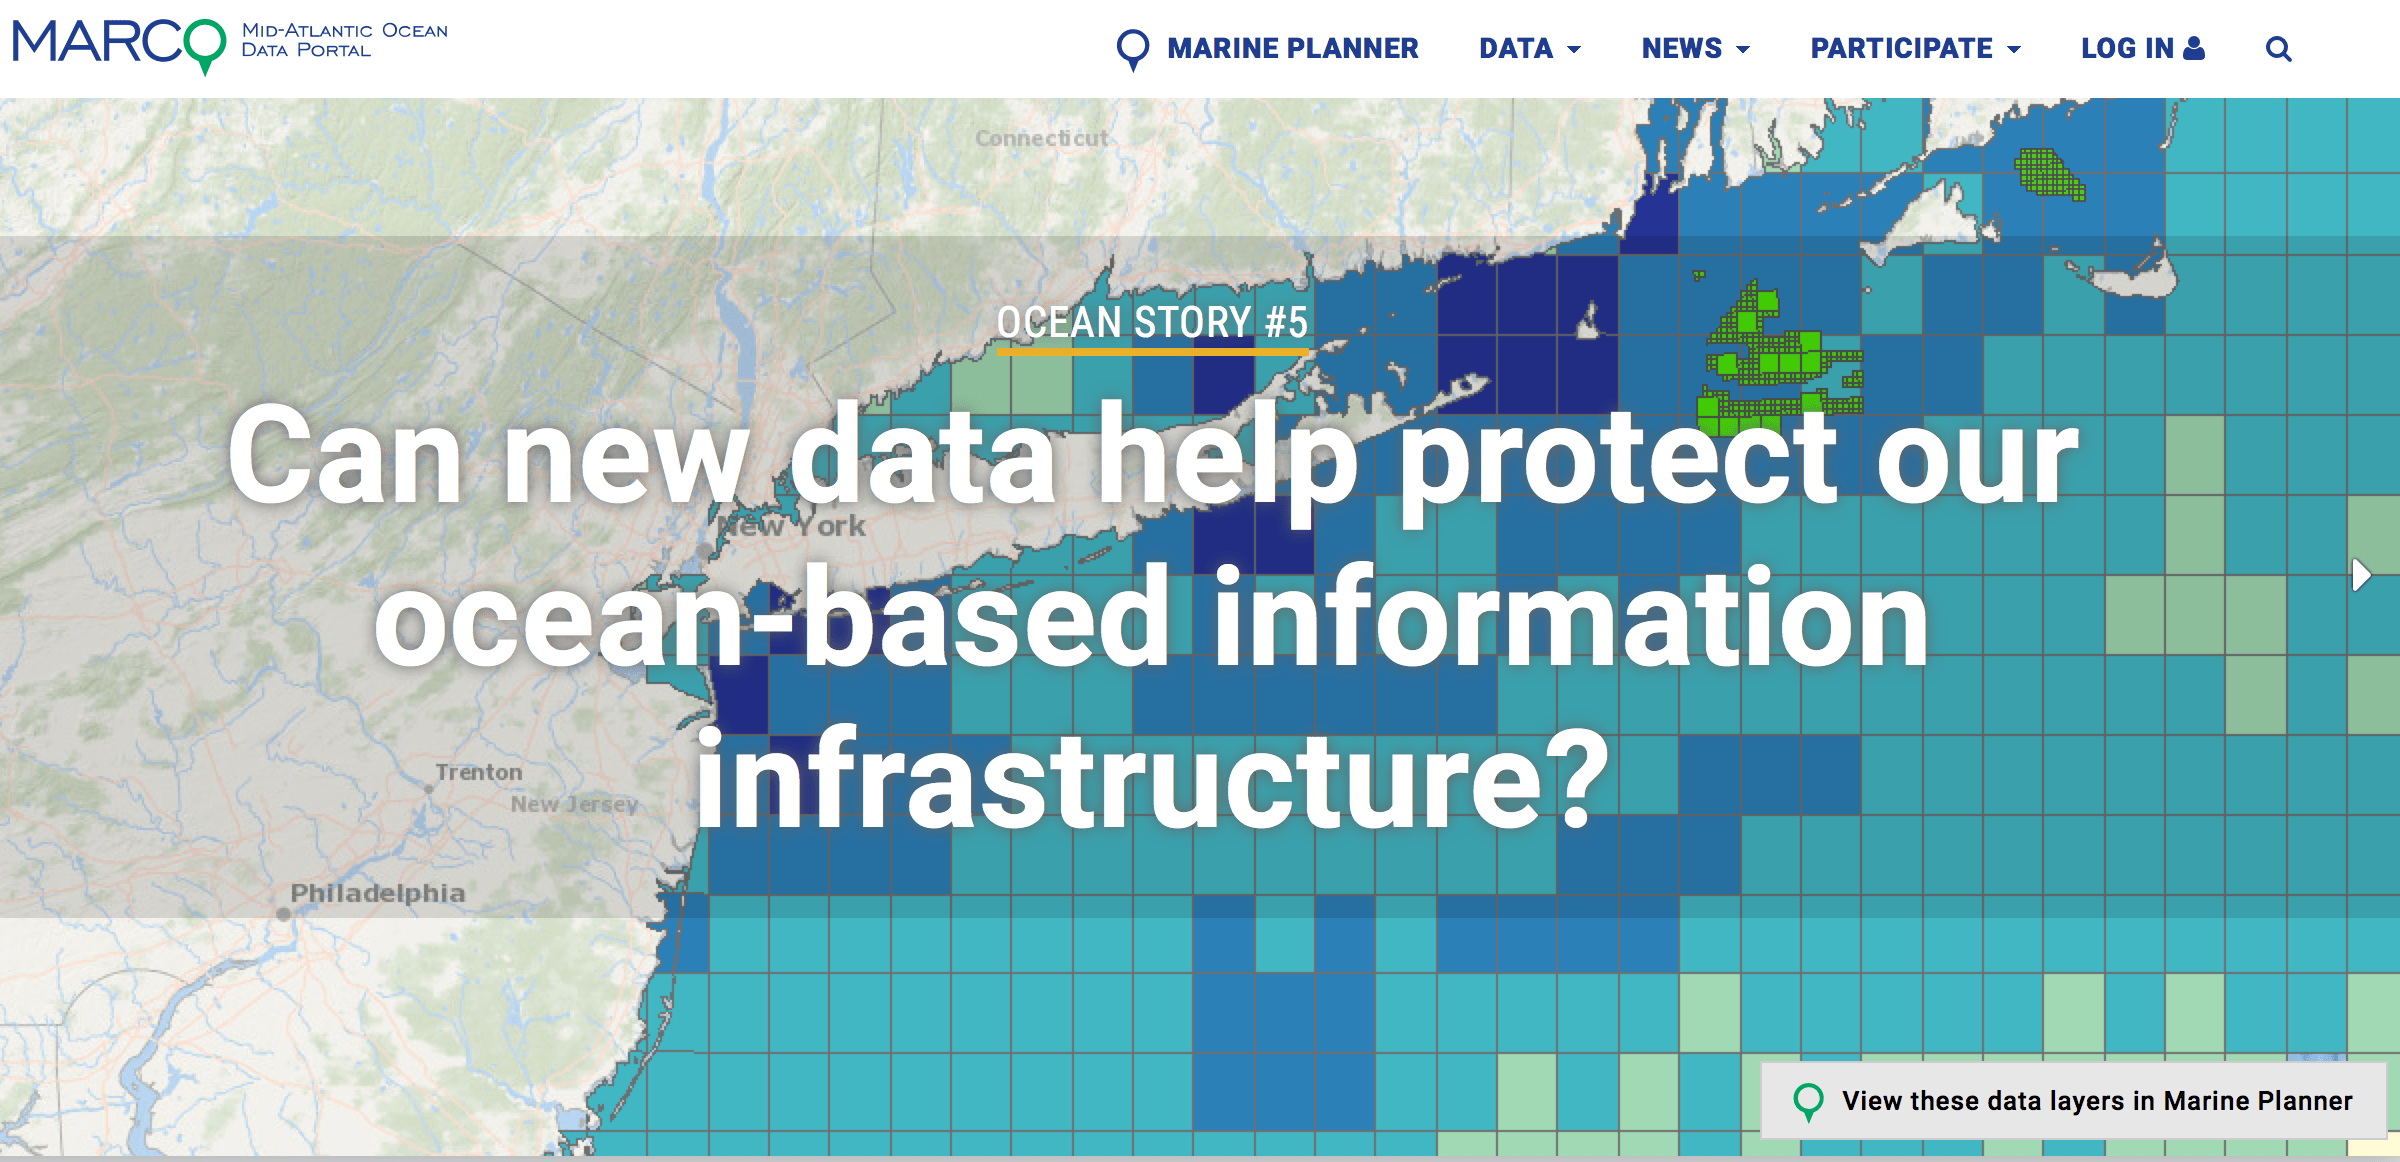 Mid-Atlantic Ocean Data Portal Redesign Links Users via Stories, Data, Mapping